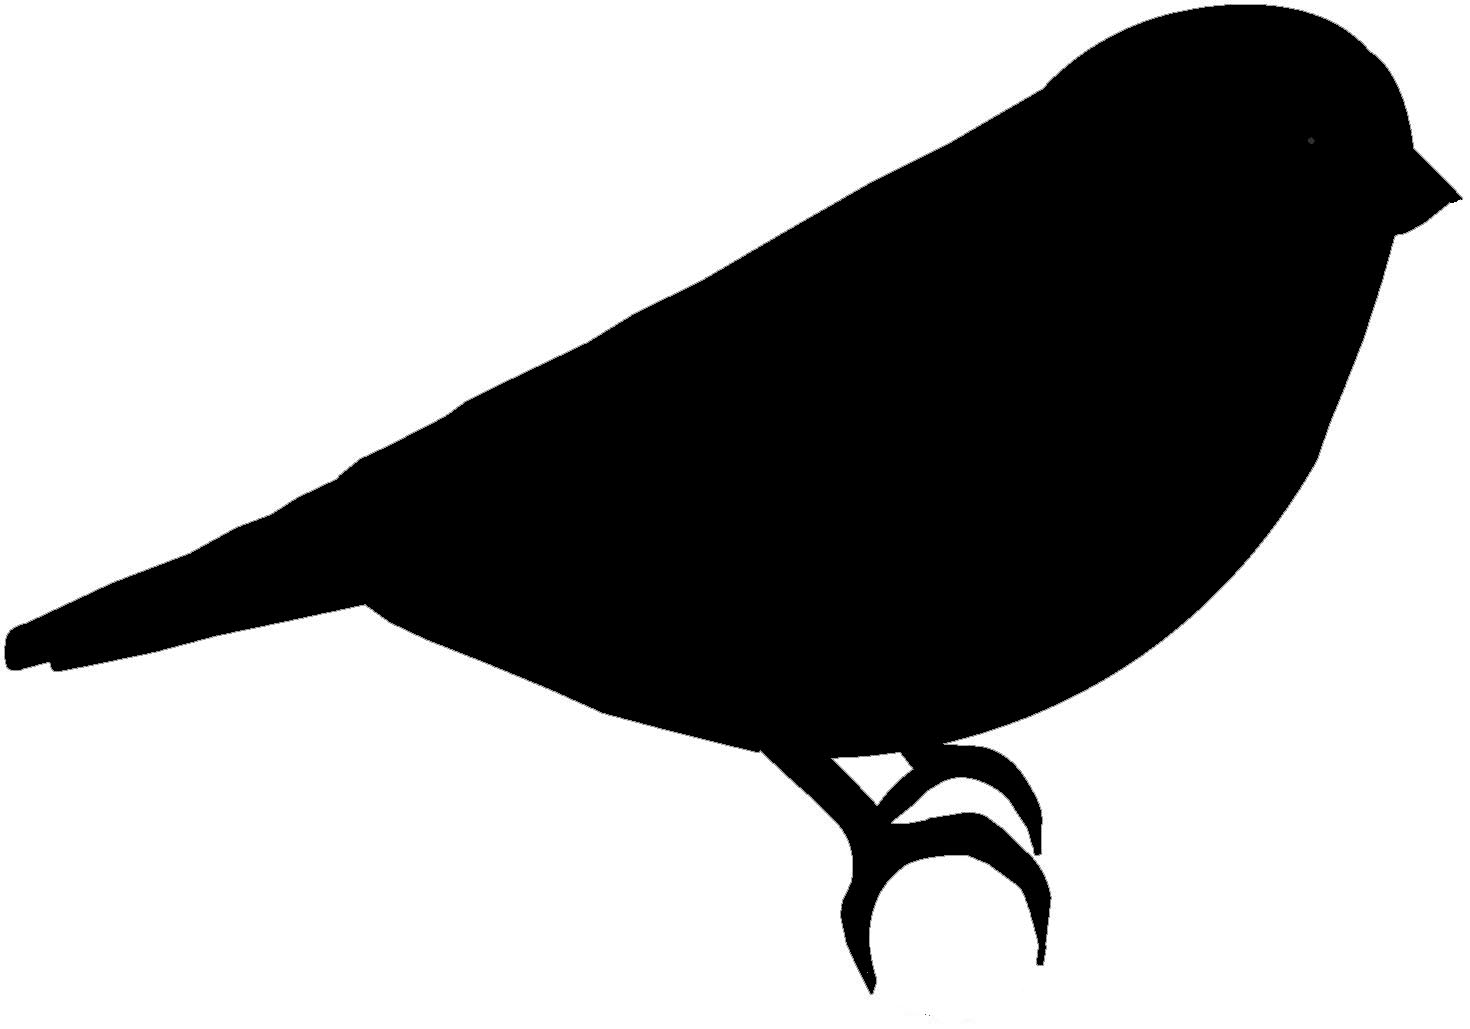 Bird Silhouette Clipart